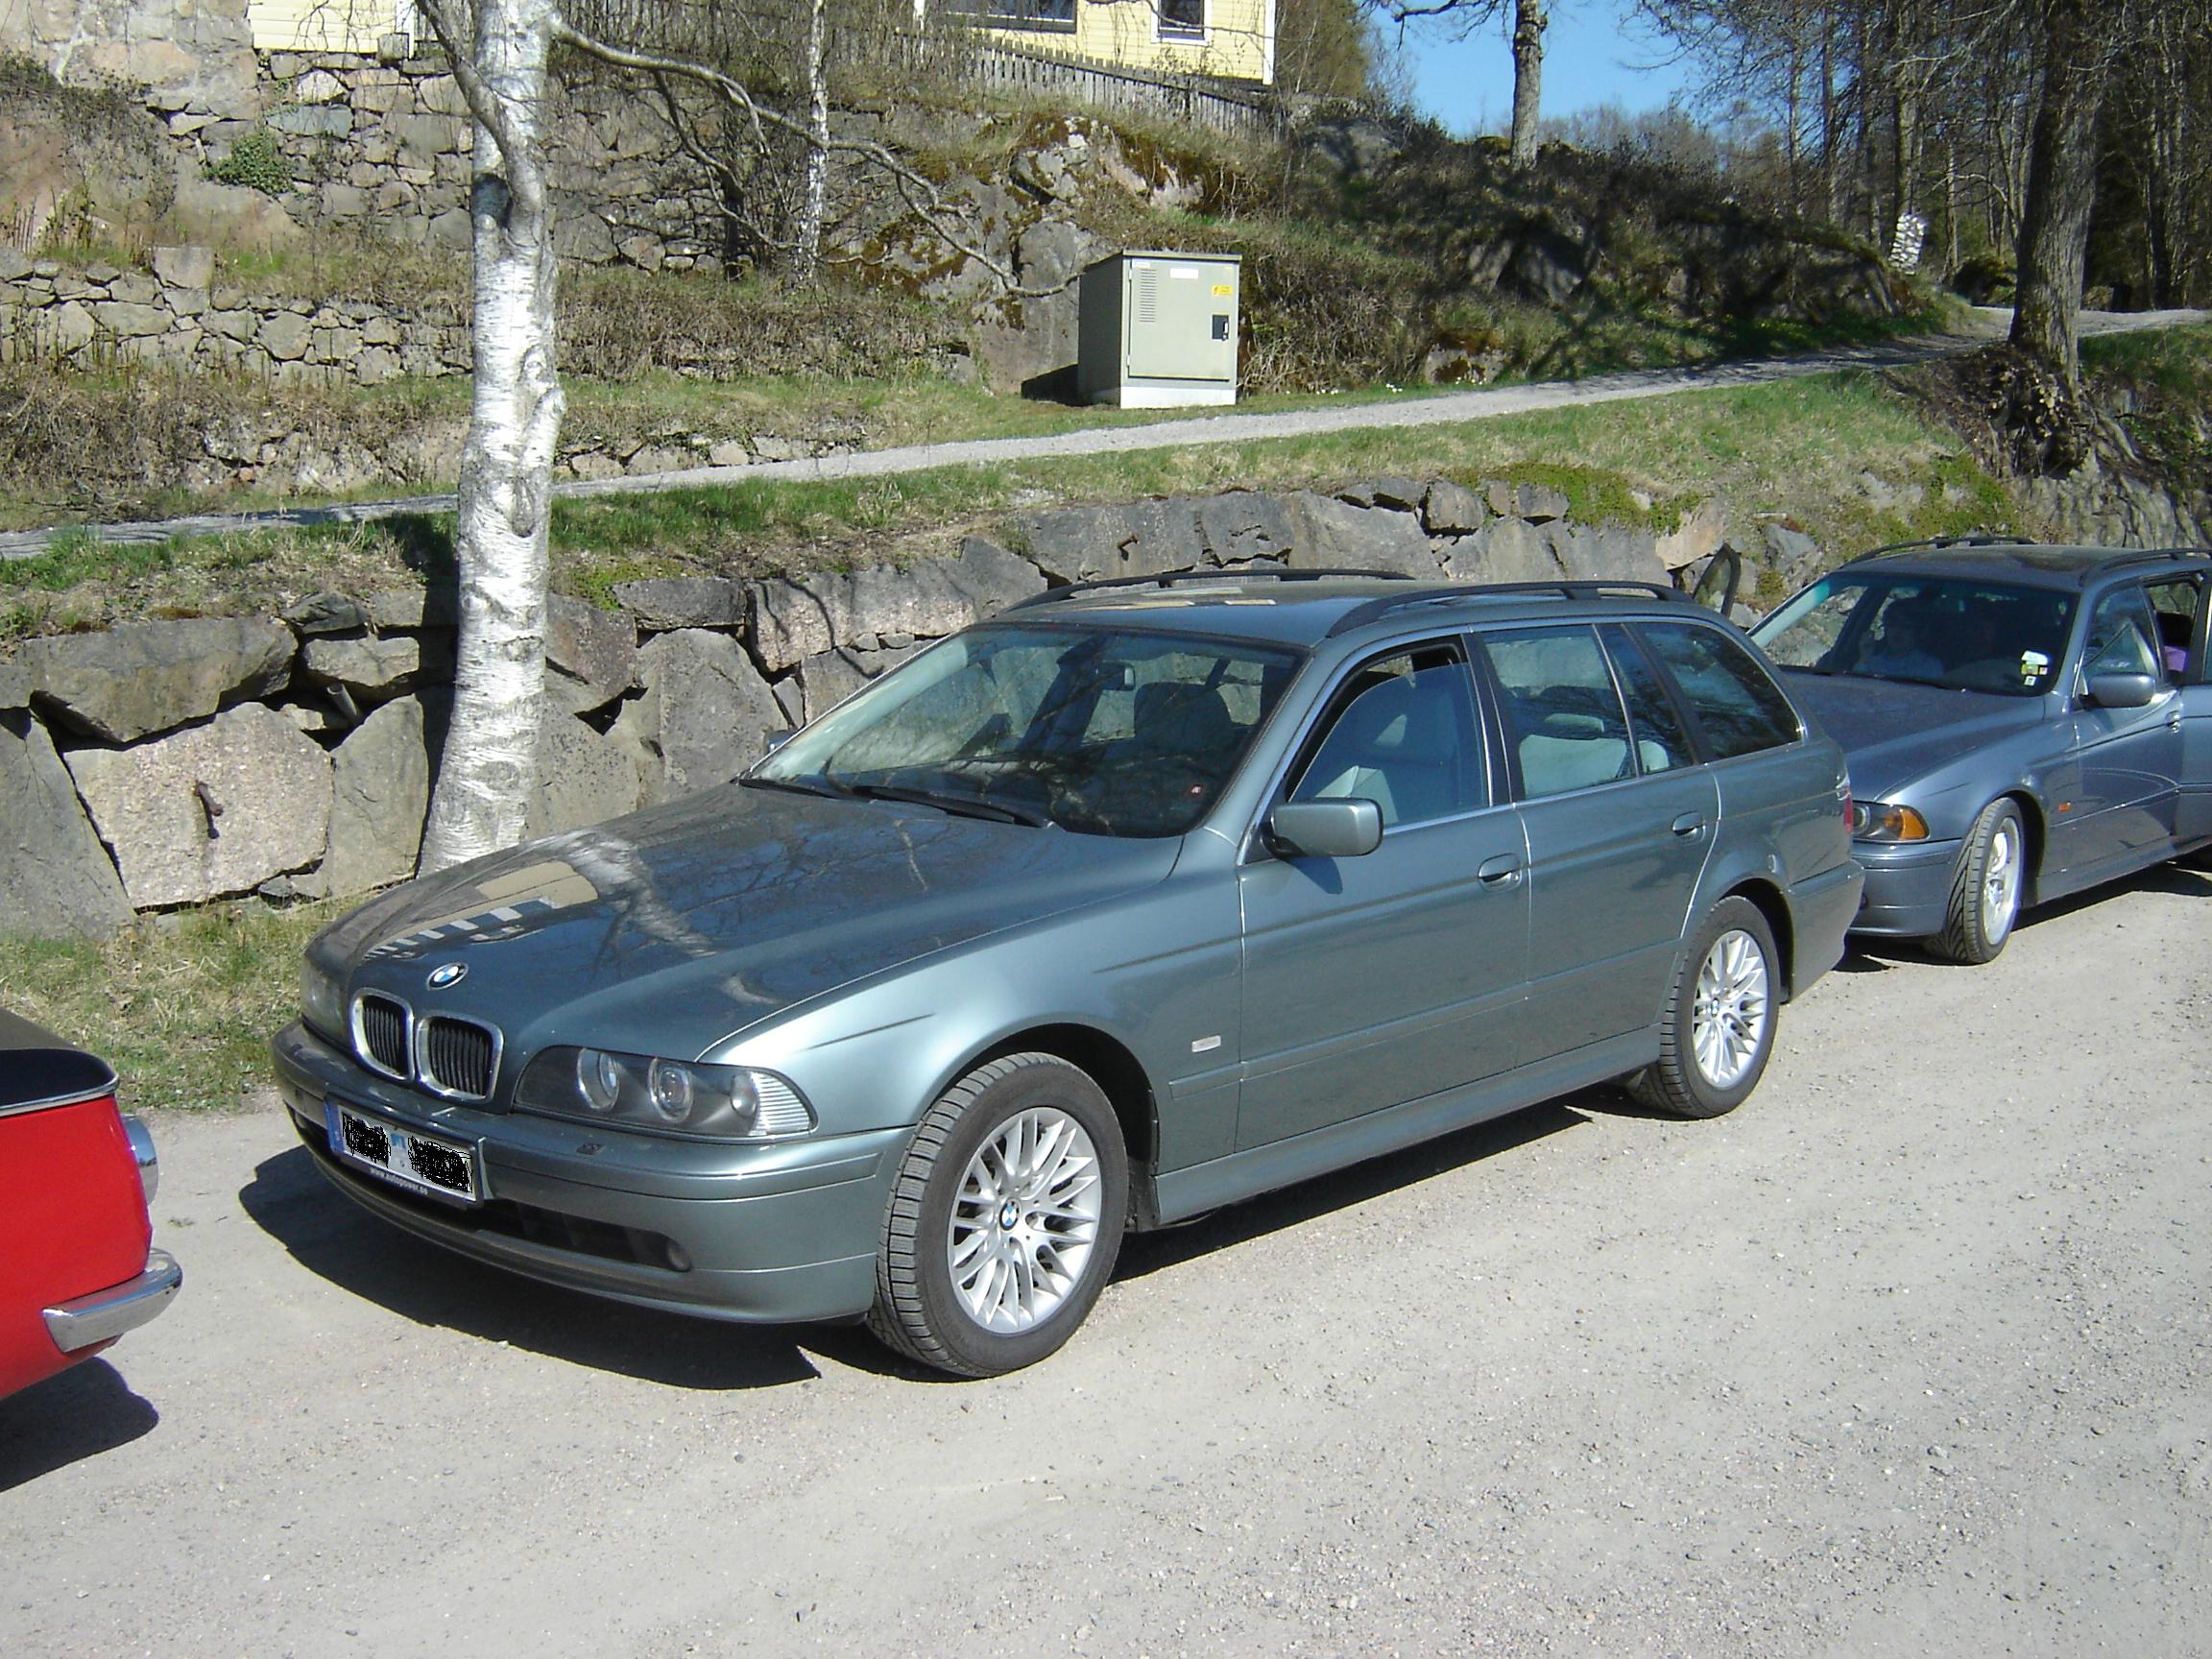 BMW 530i Touring | Flickr - Photo Sharing!